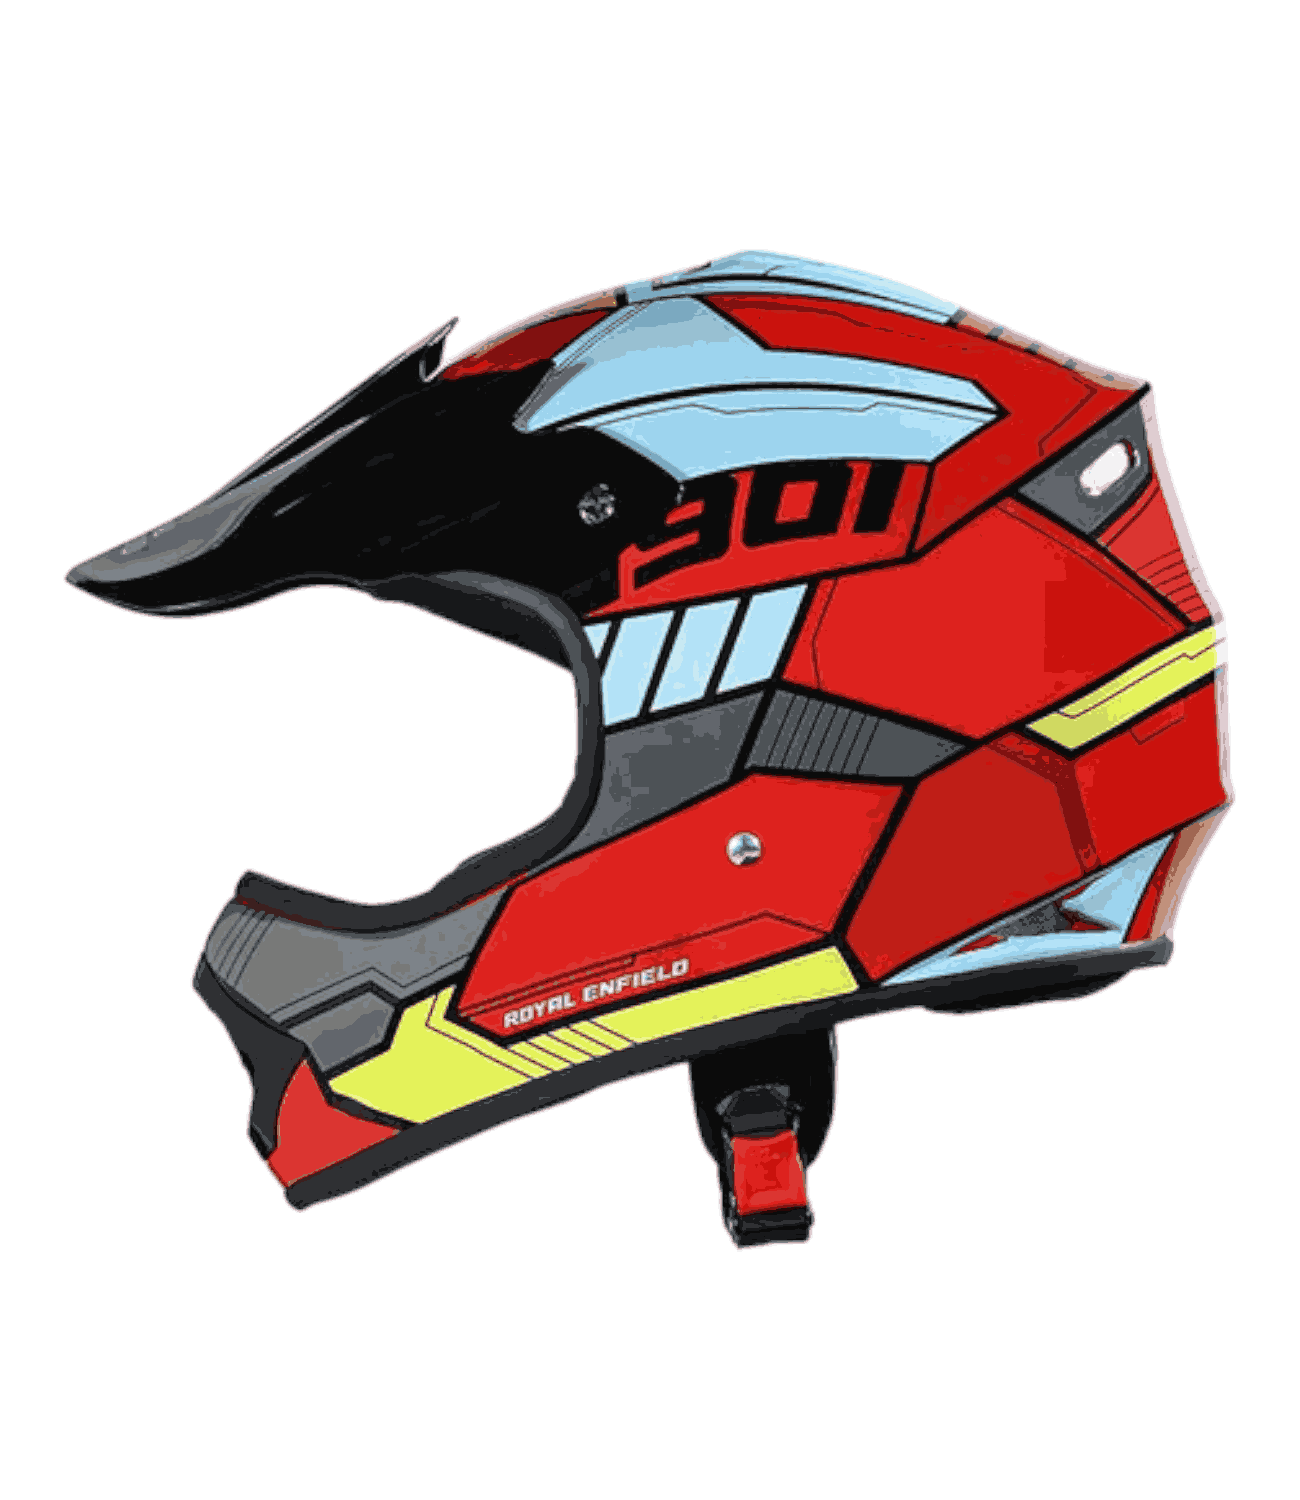 RE Motocross Kids Helmet - Red